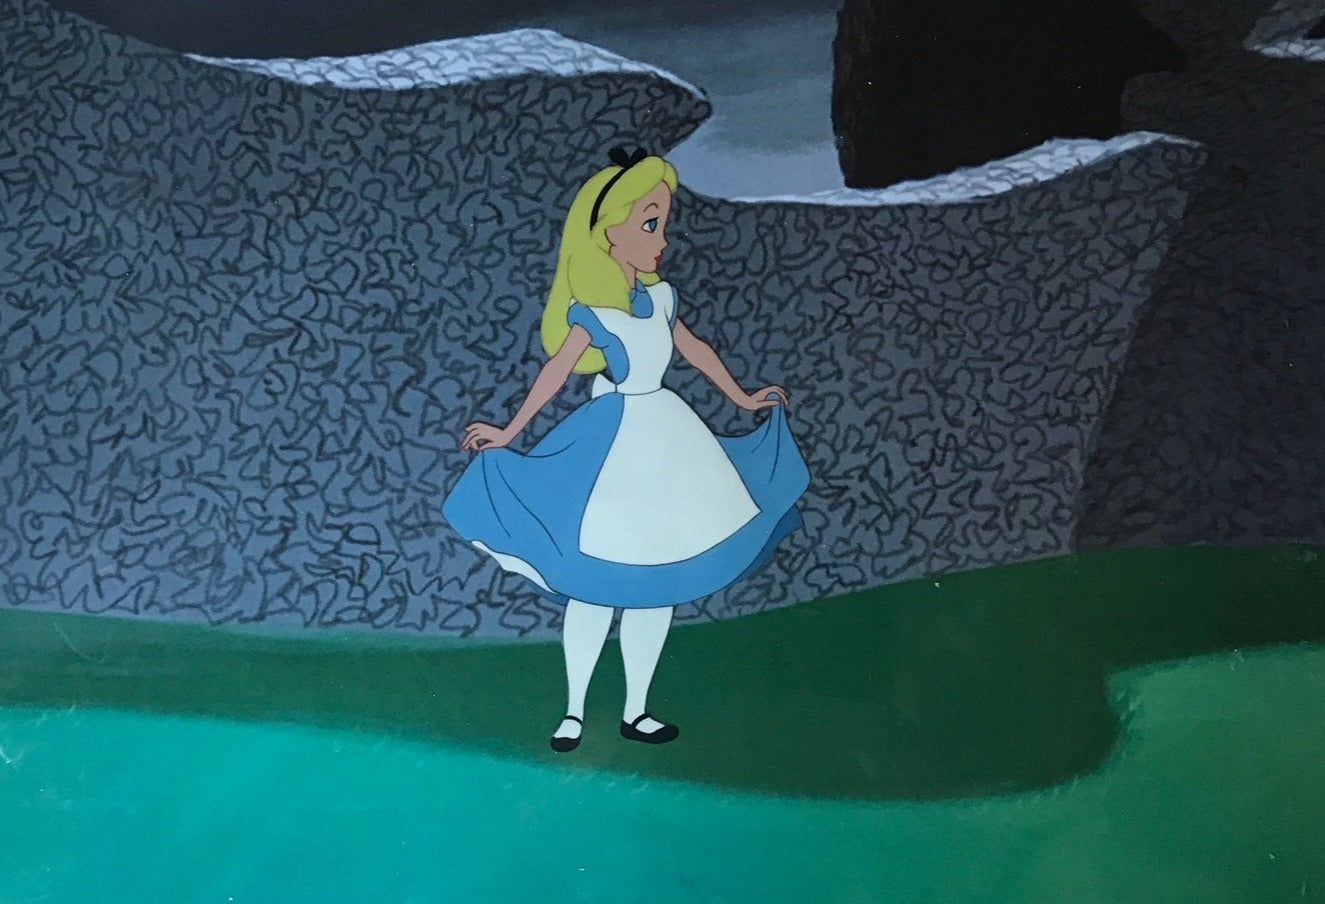 Original Walt Disney Production Cel from Alice in Wonderland featuring Alice